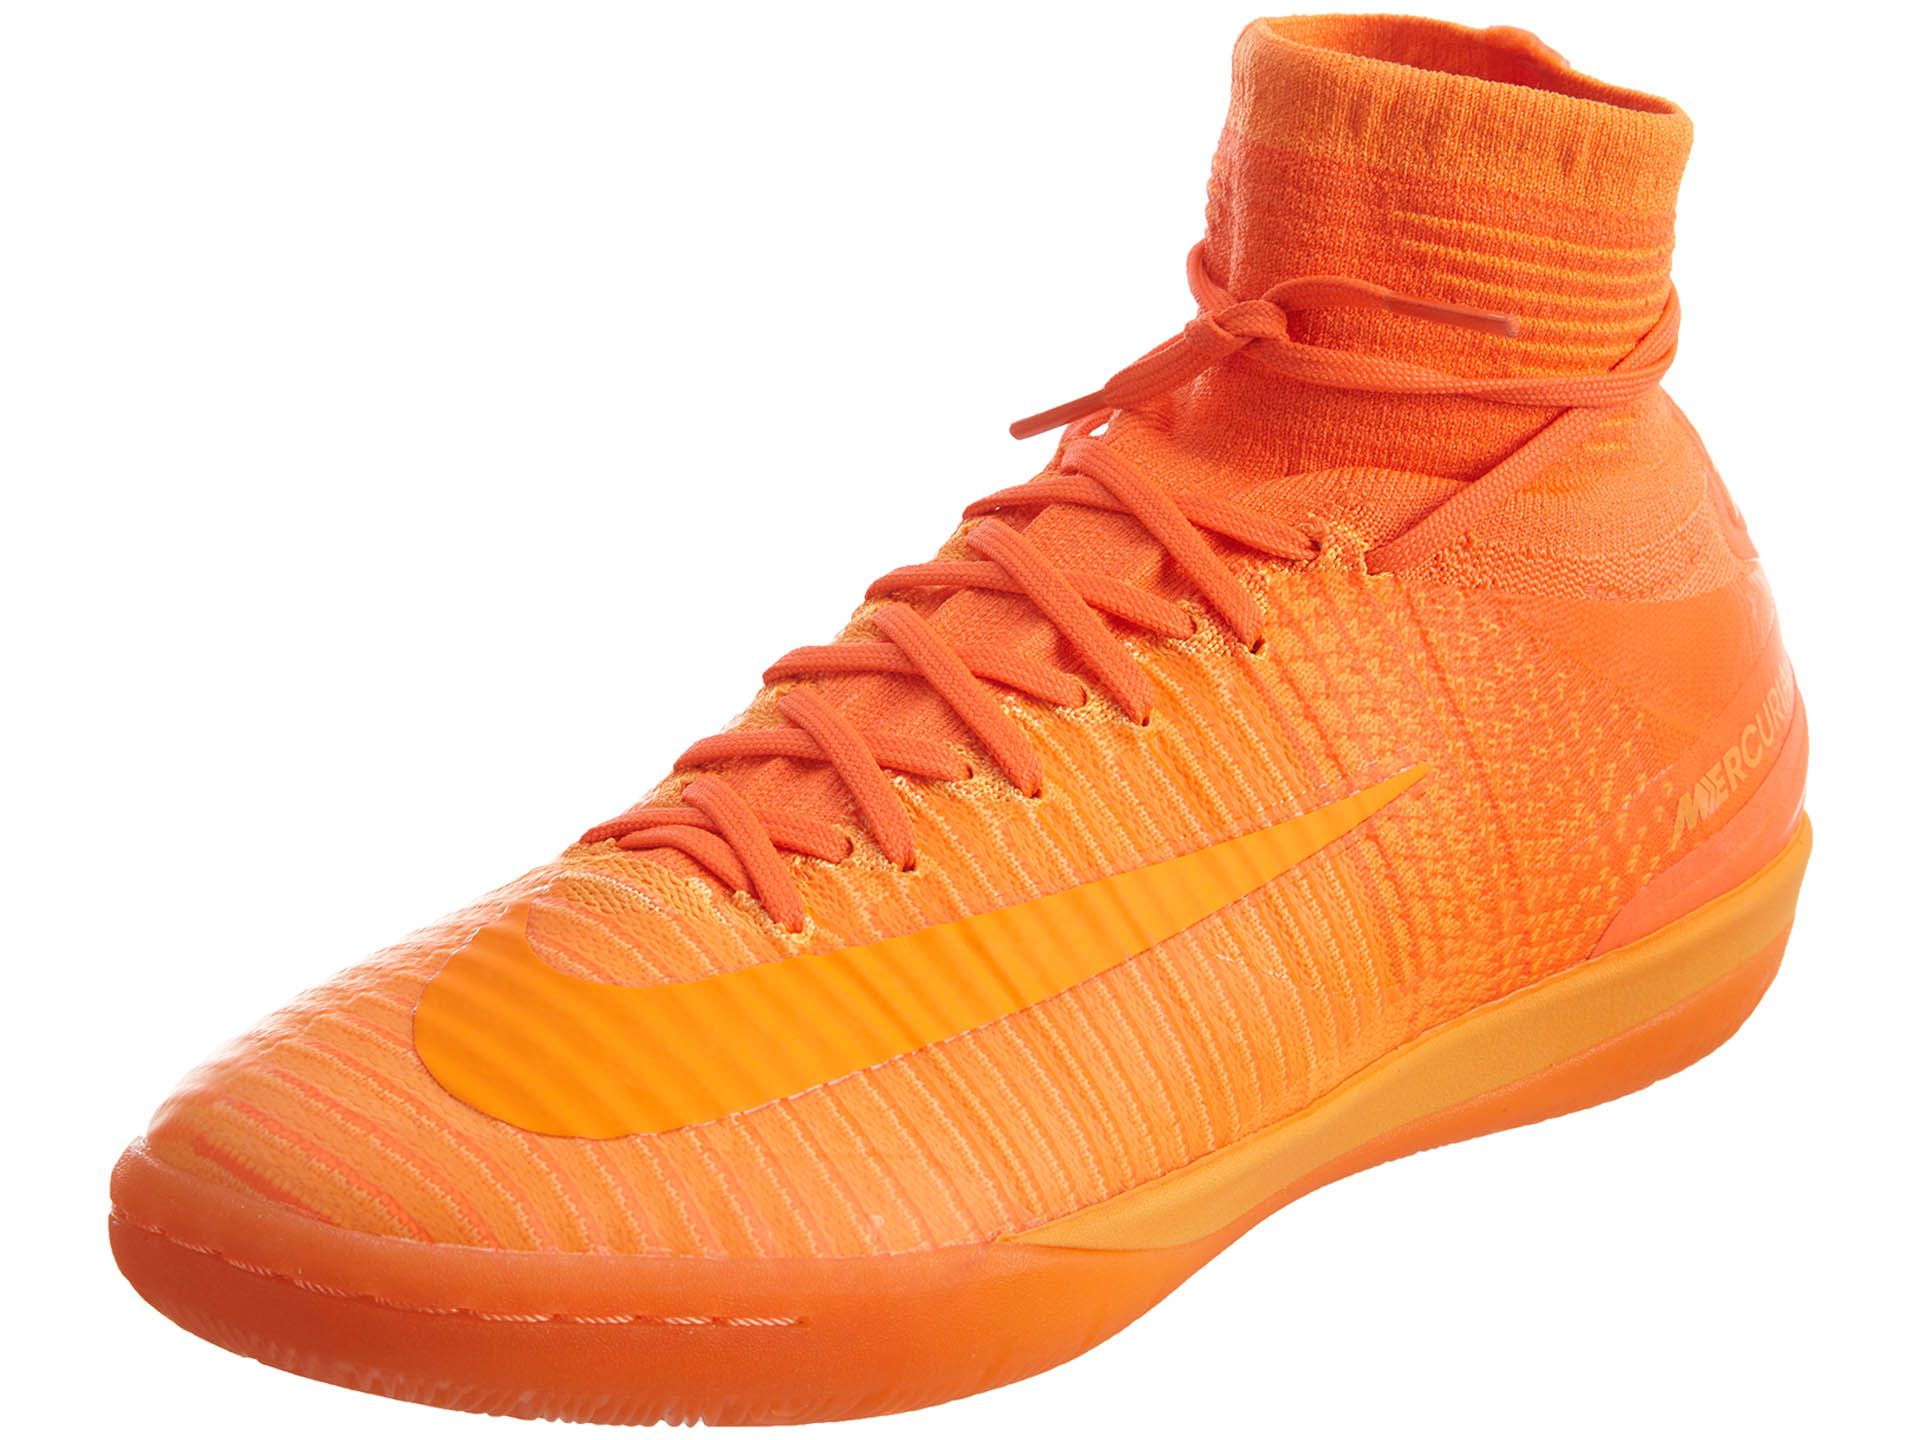 Nike Mercurialx Proximo Ii Ic Total Orange/Bright Ctrs-Hyper Crimson-P-888